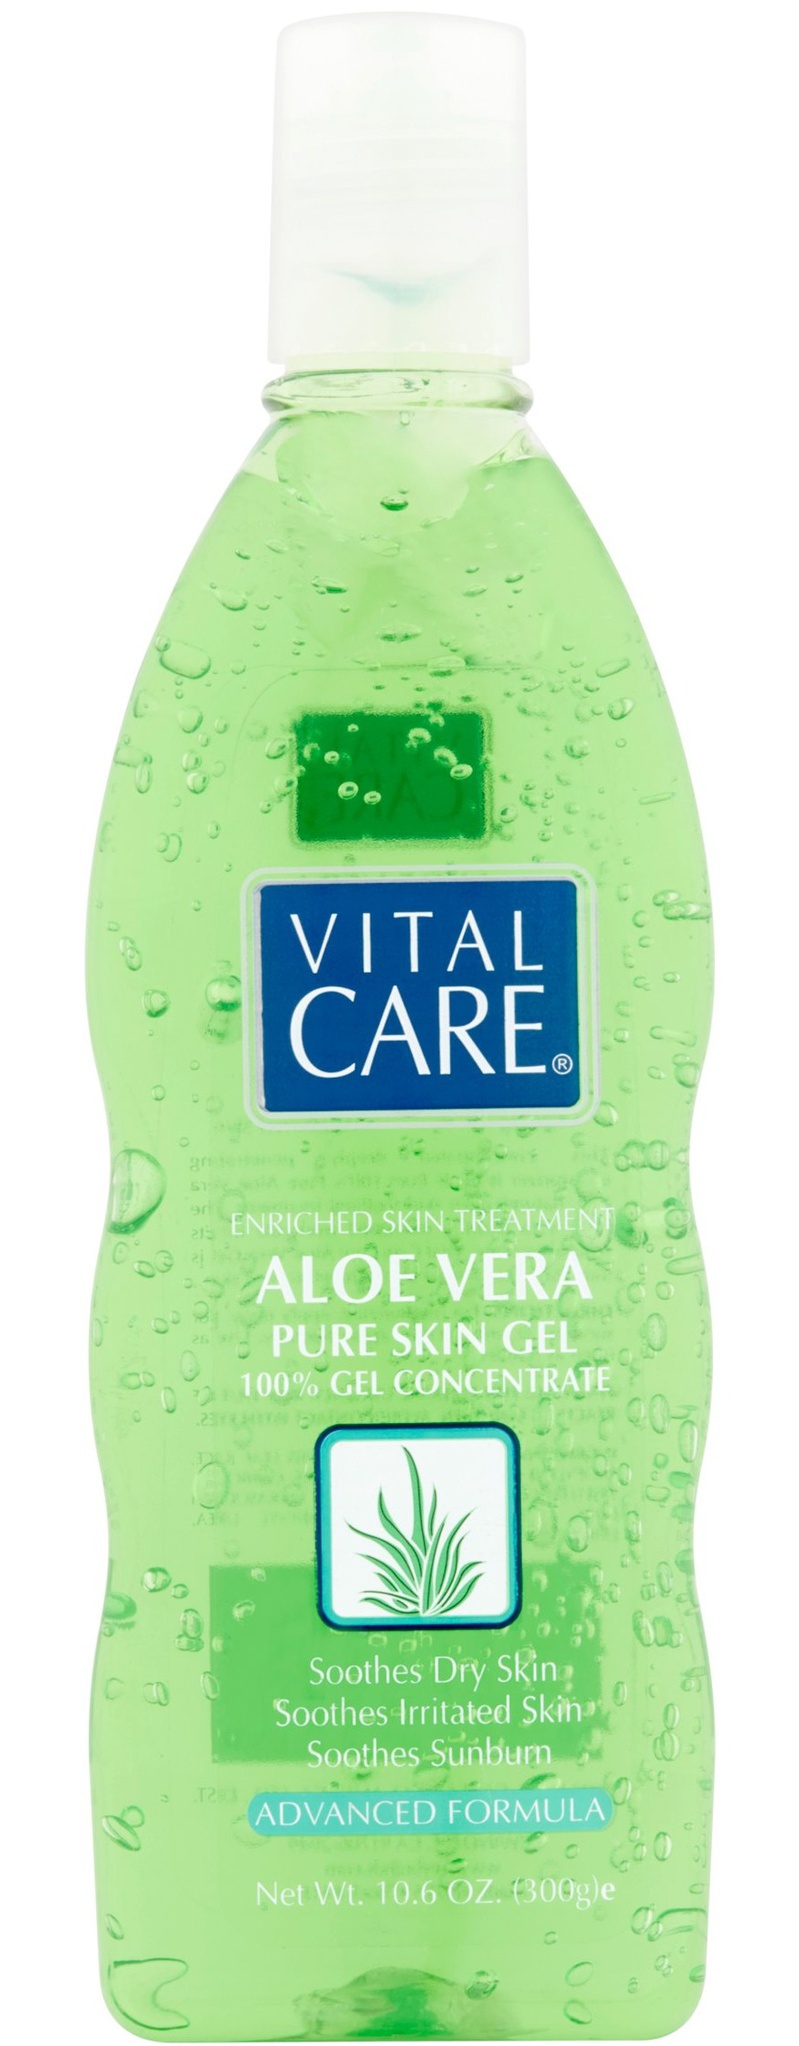 Vital Care Aloe Vera Pure Skin Gel